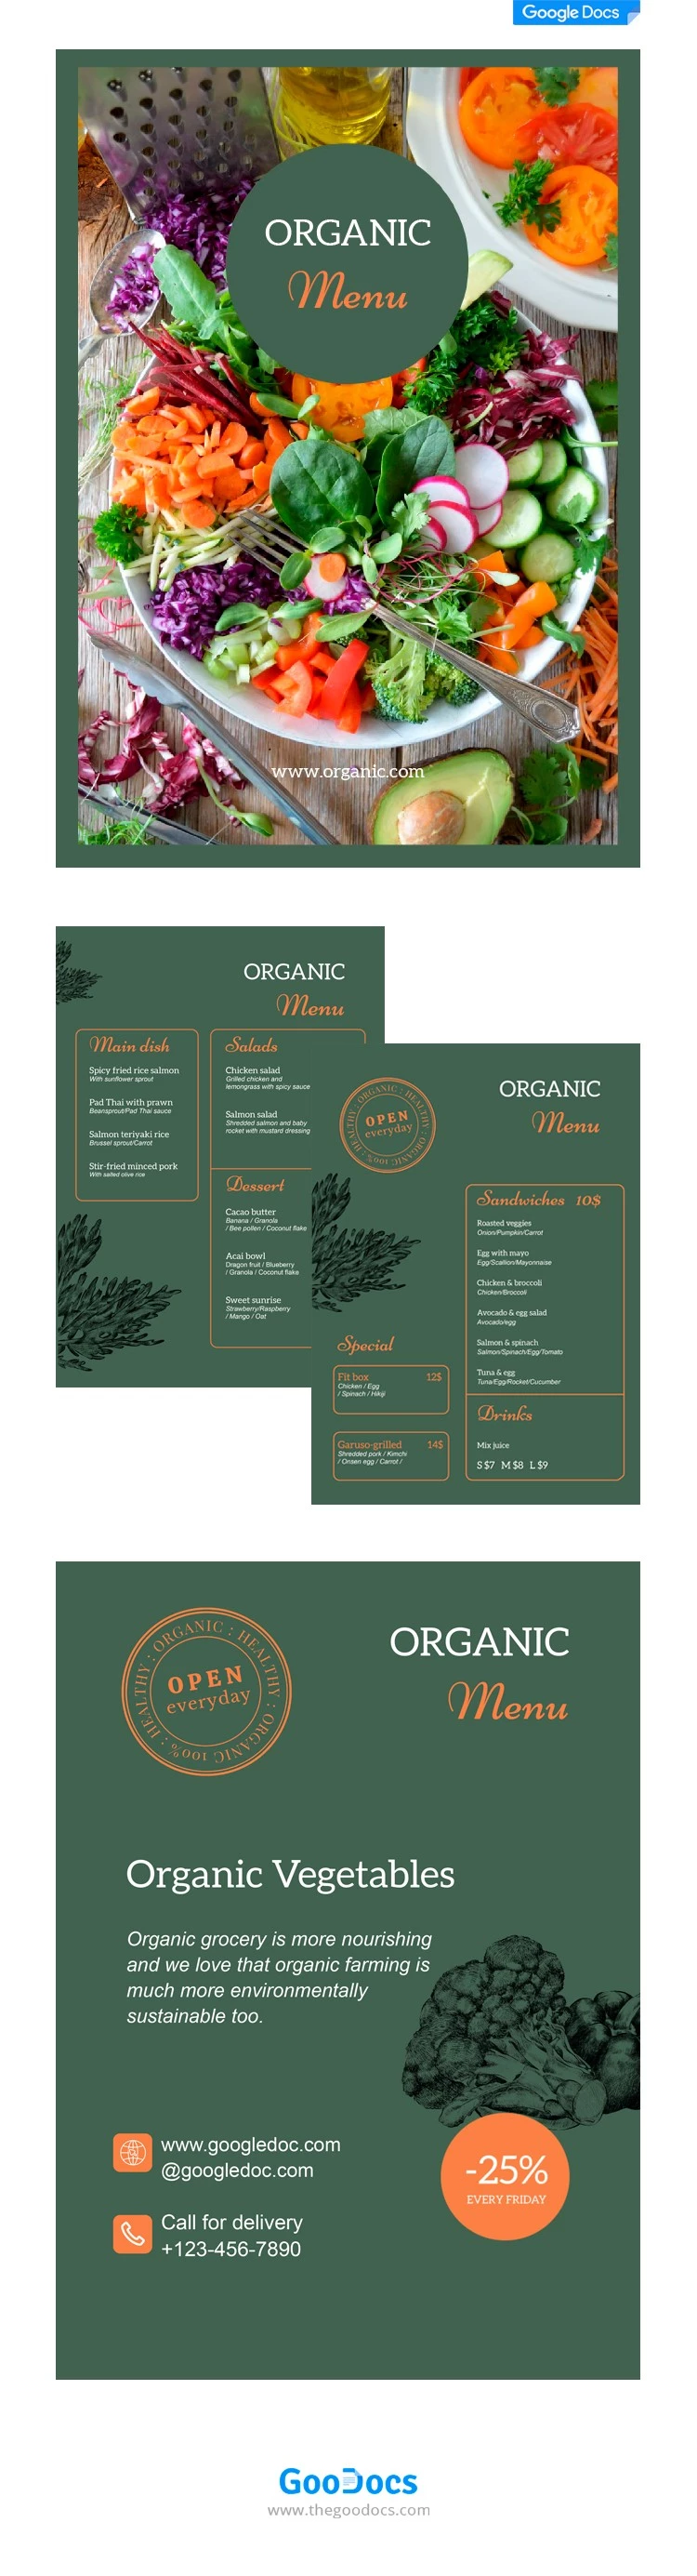 Organische Lebensmittelkarte - free Google Docs Template - 10062112